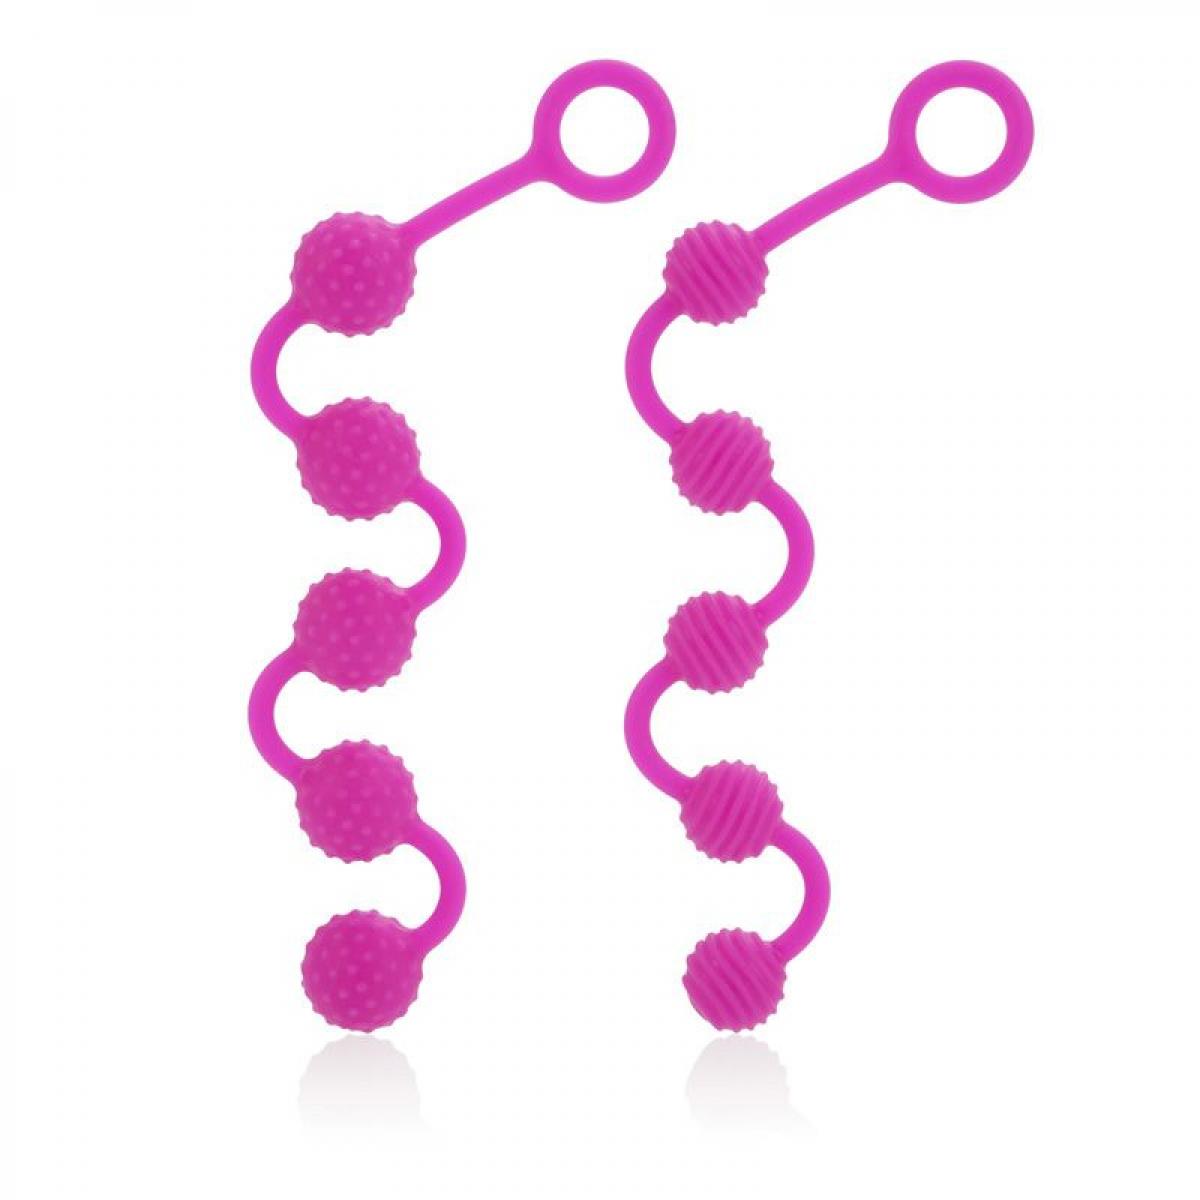 Две анальные цепочки различного рельефа Posh Silicone  O  Beads